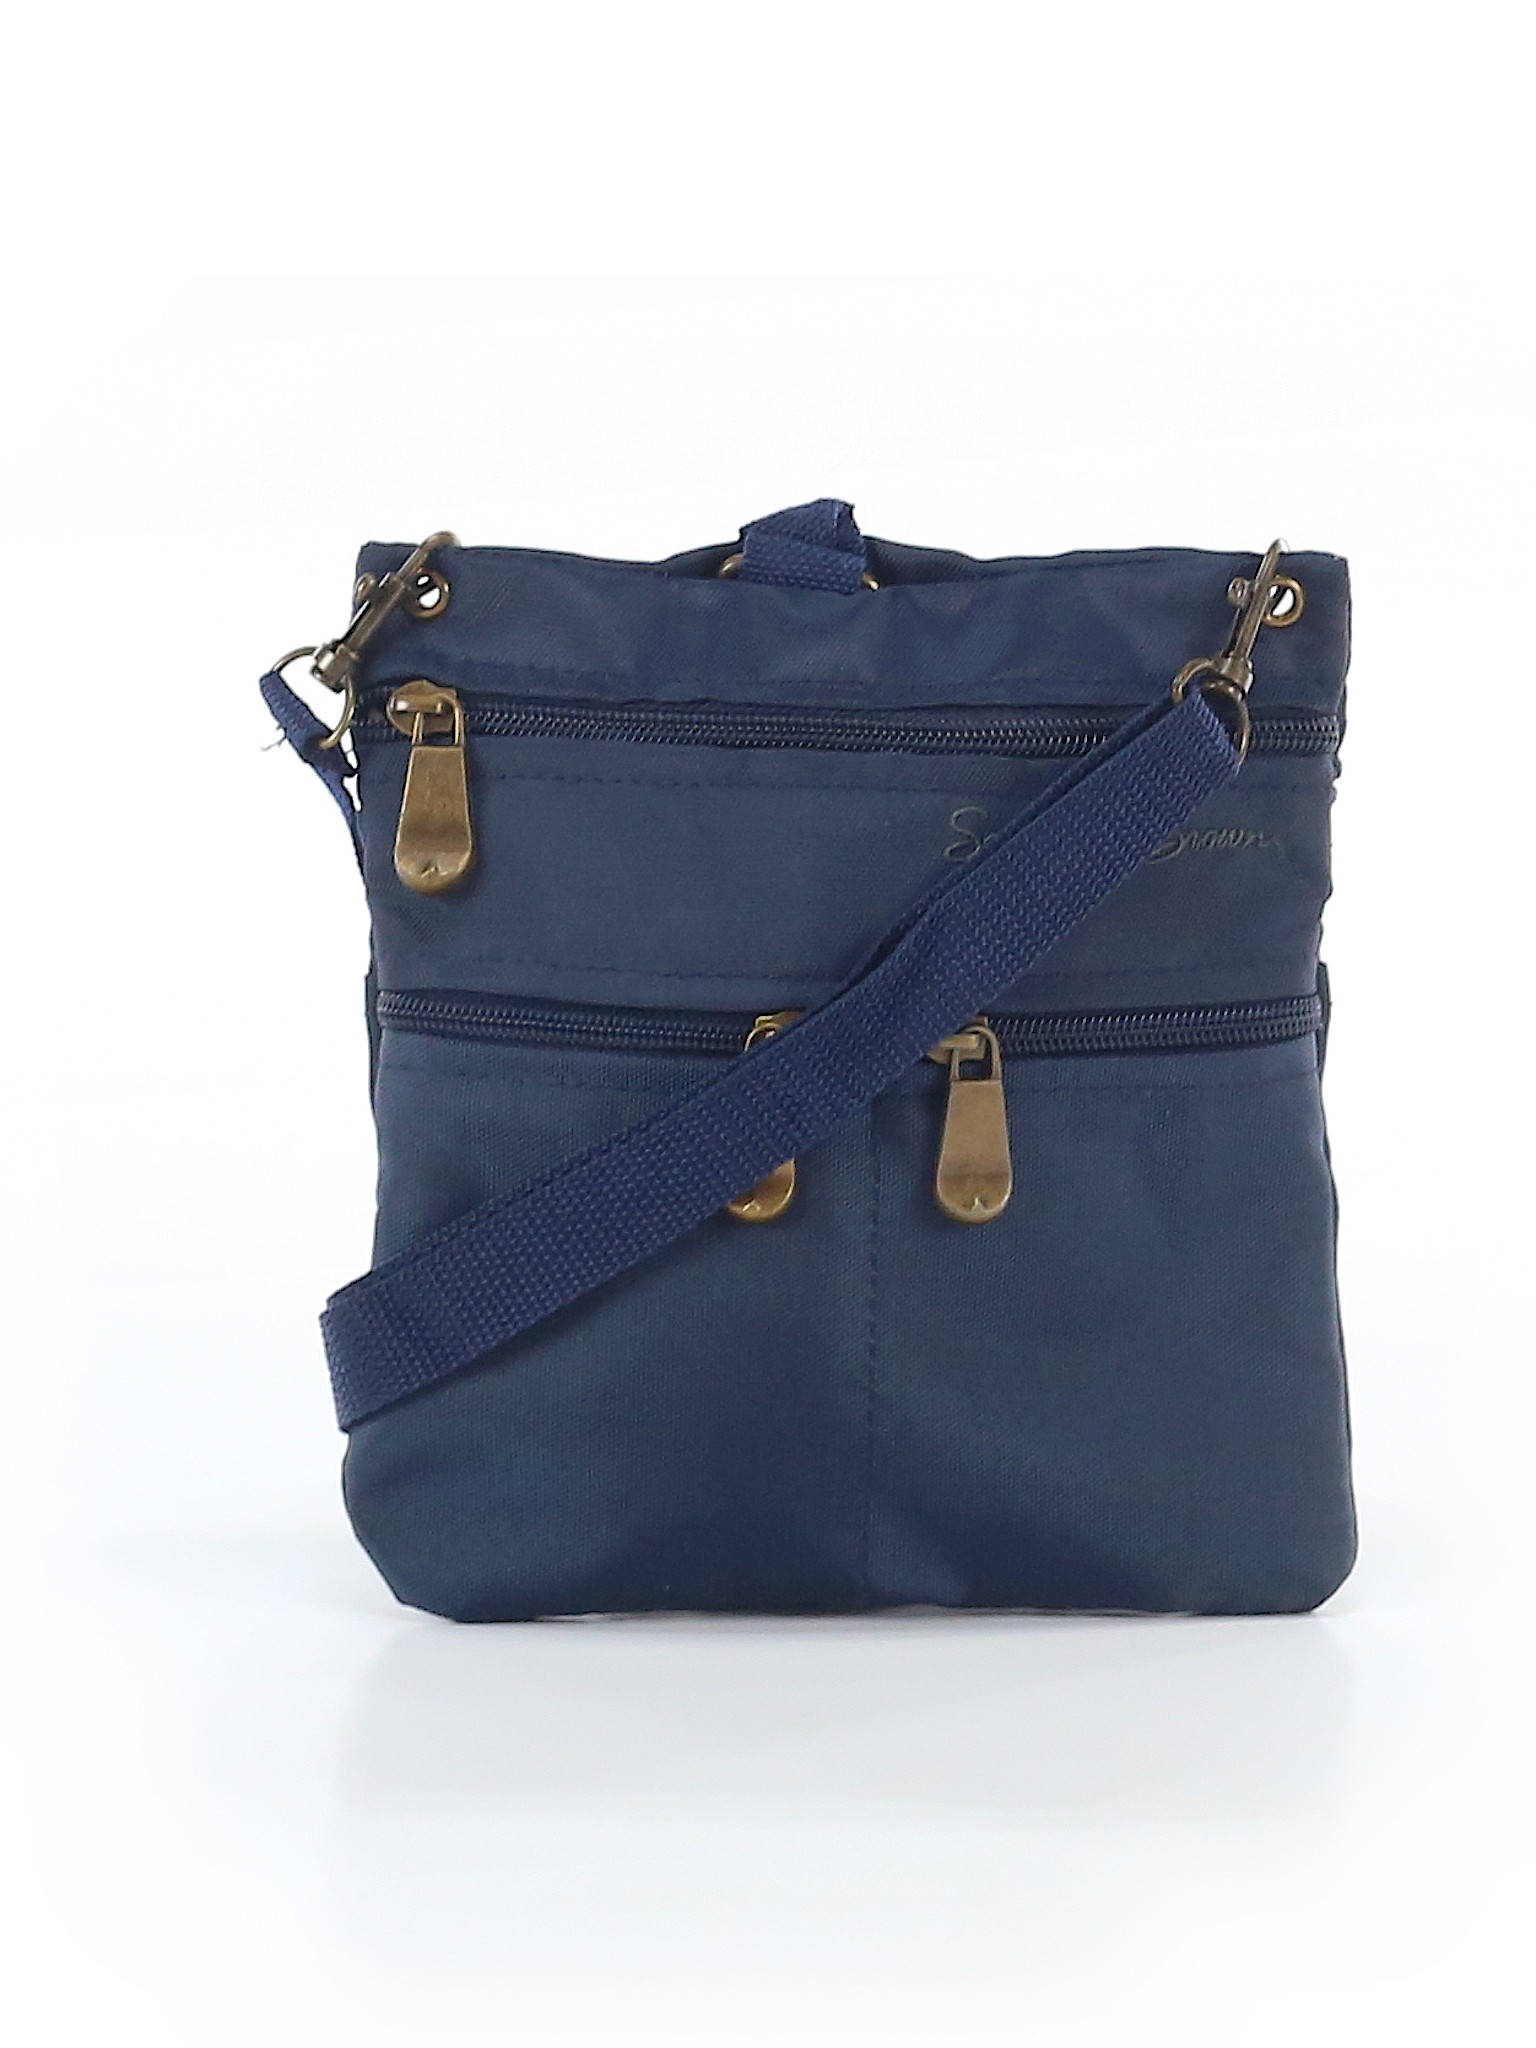 Samantha Brown Solid Blue Crossbody Bag One Size - 28% off | thredUP